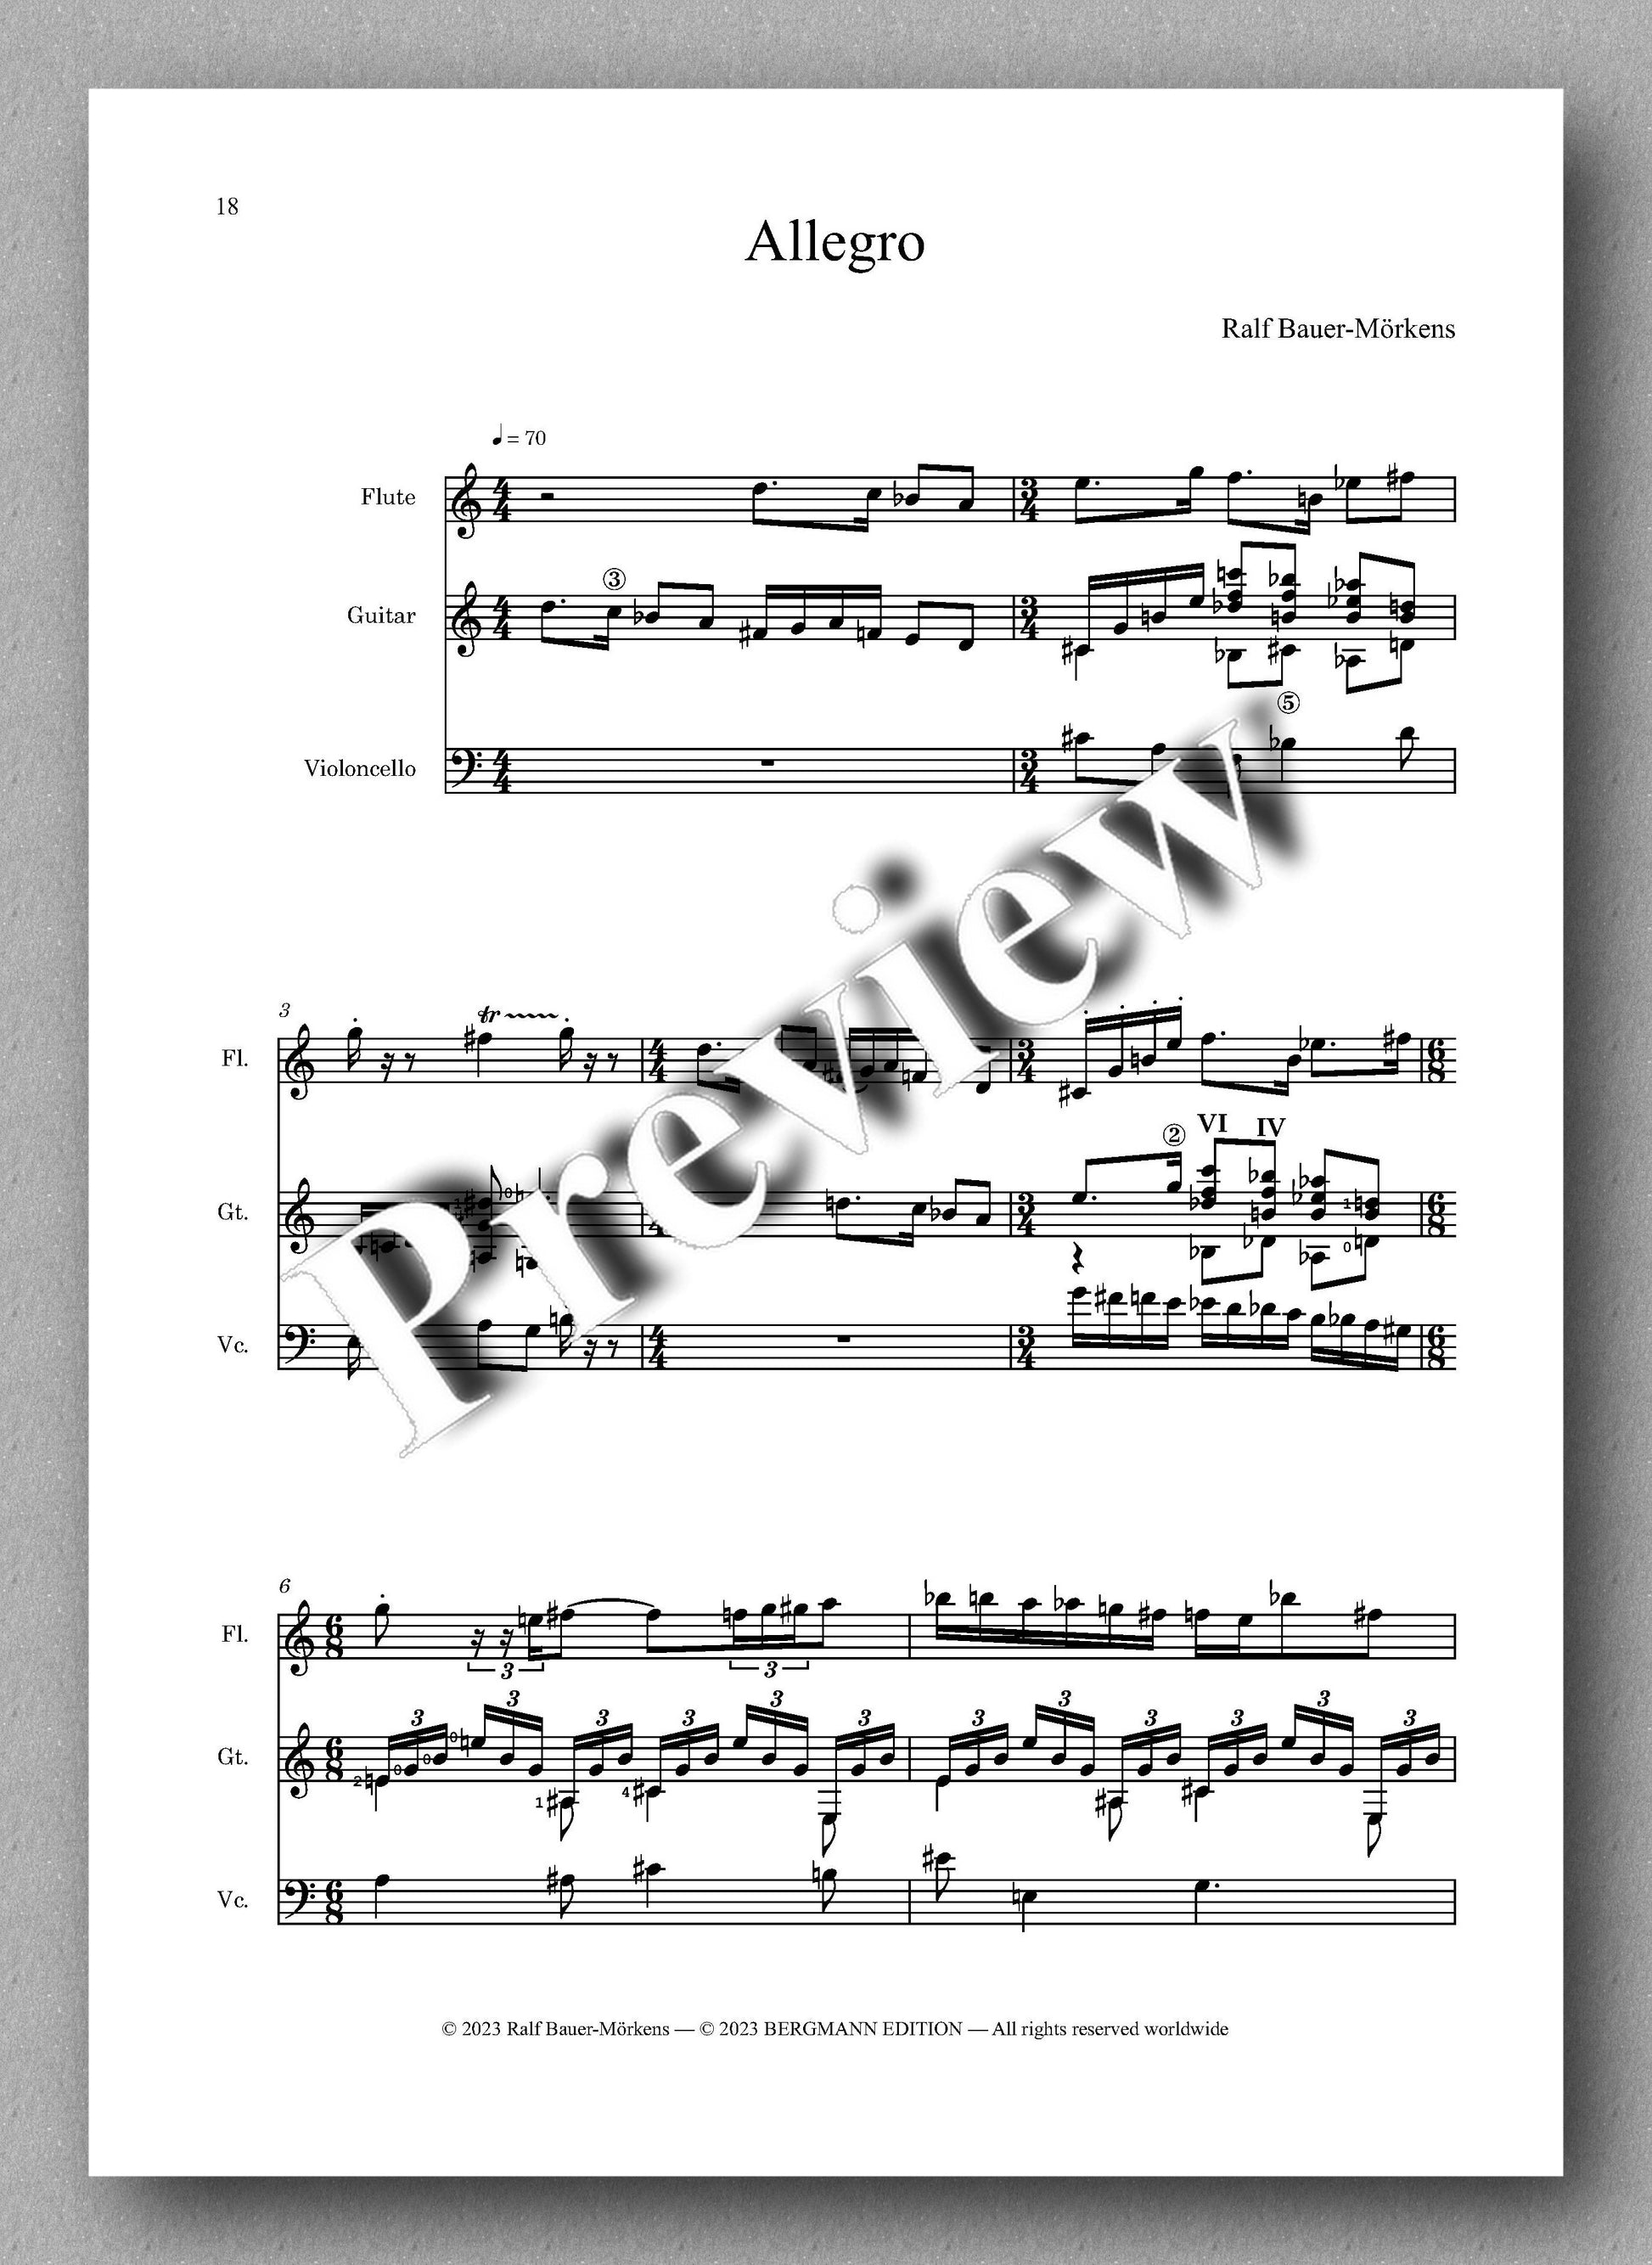 Ralf Bauer-Mörkens, Passeggiata - preview of the music score 4